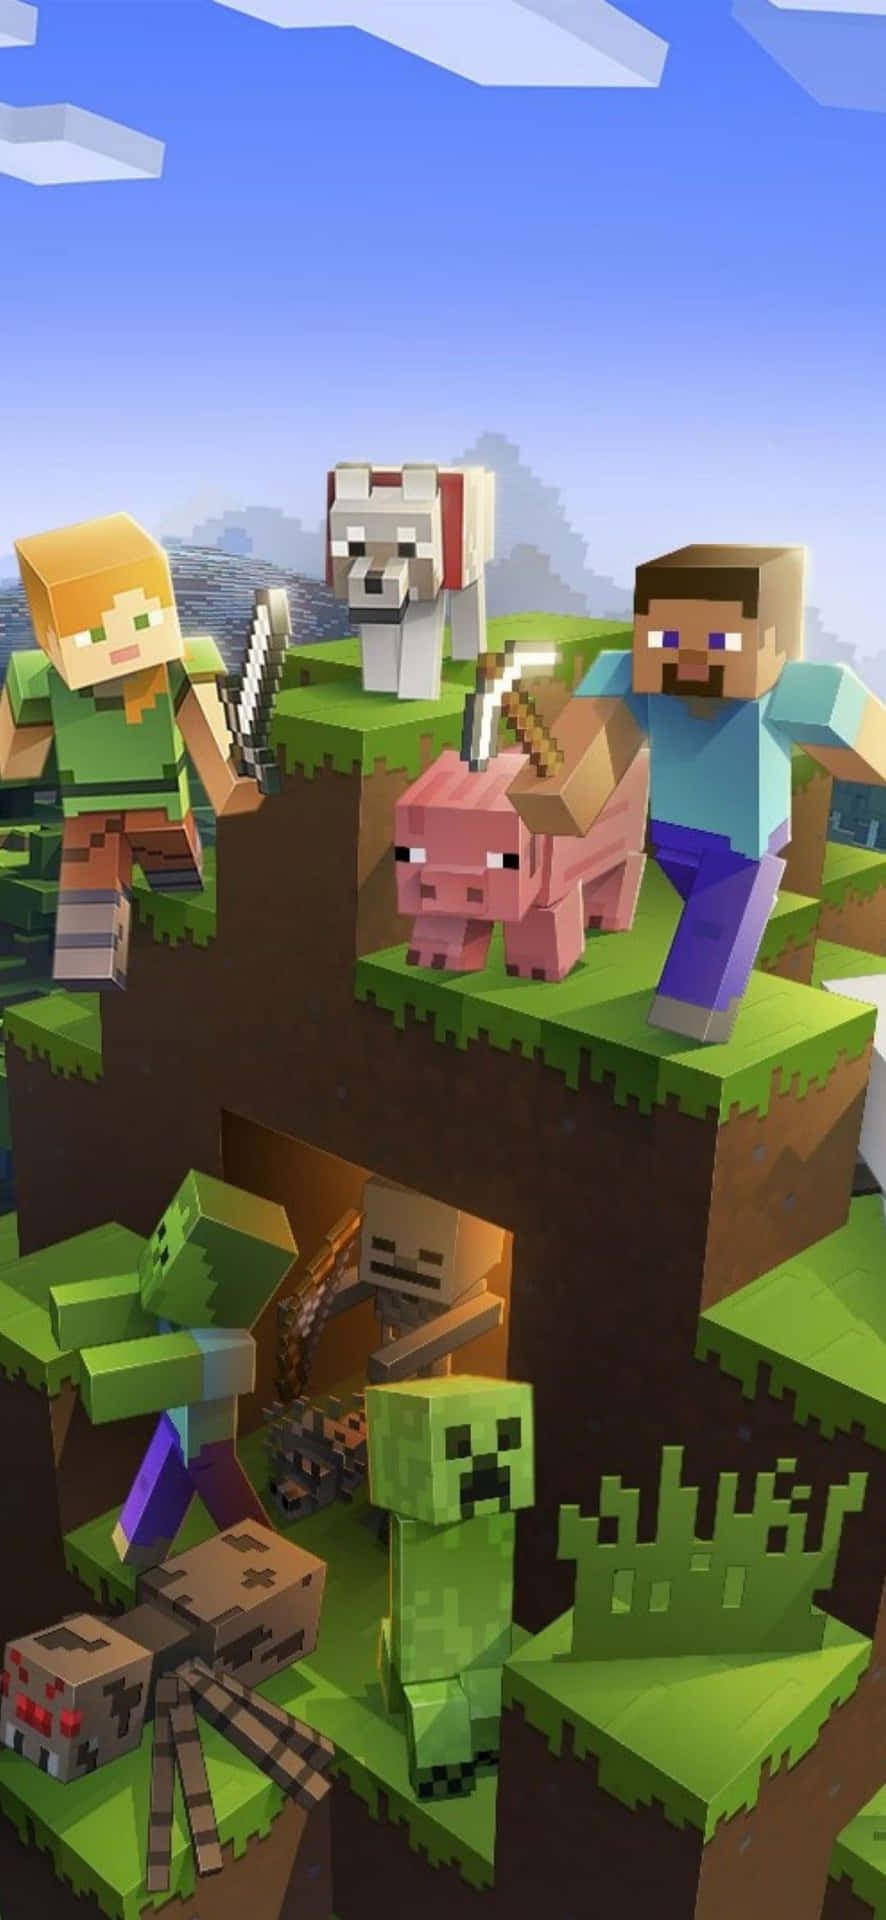 Lindopersonaje De Minecraft De Dibujos Animados Parado Frente A Un Paisaje Colorido. Fondo de pantalla